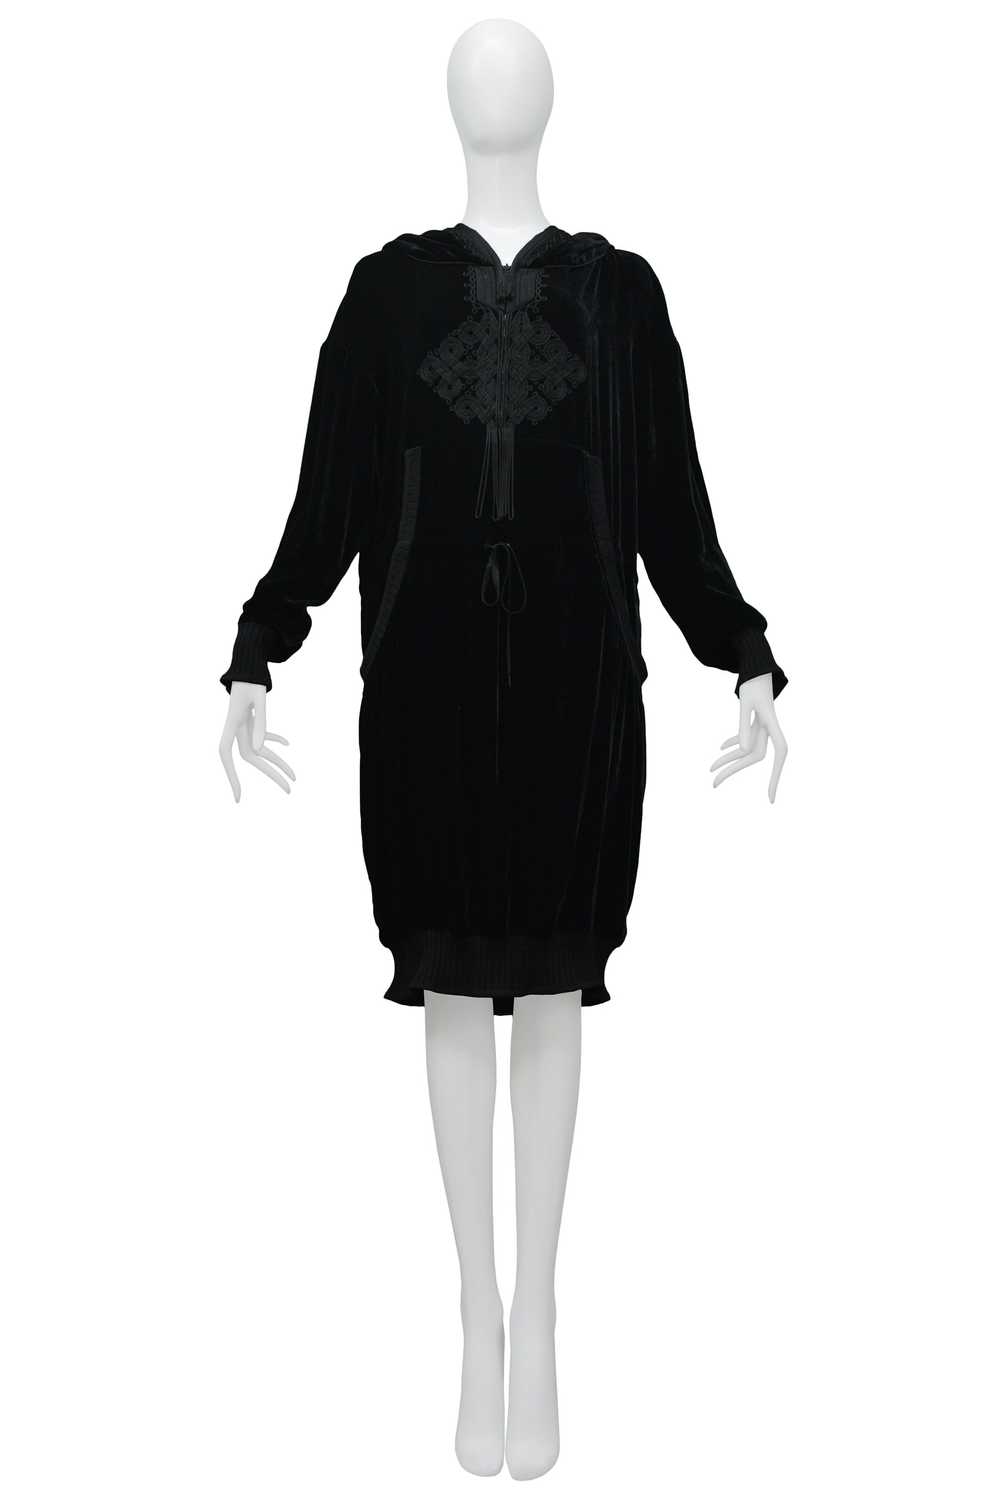 GAULTIER BLACK VELVET HOODIE TUNIC DRESS 2010 - image 3